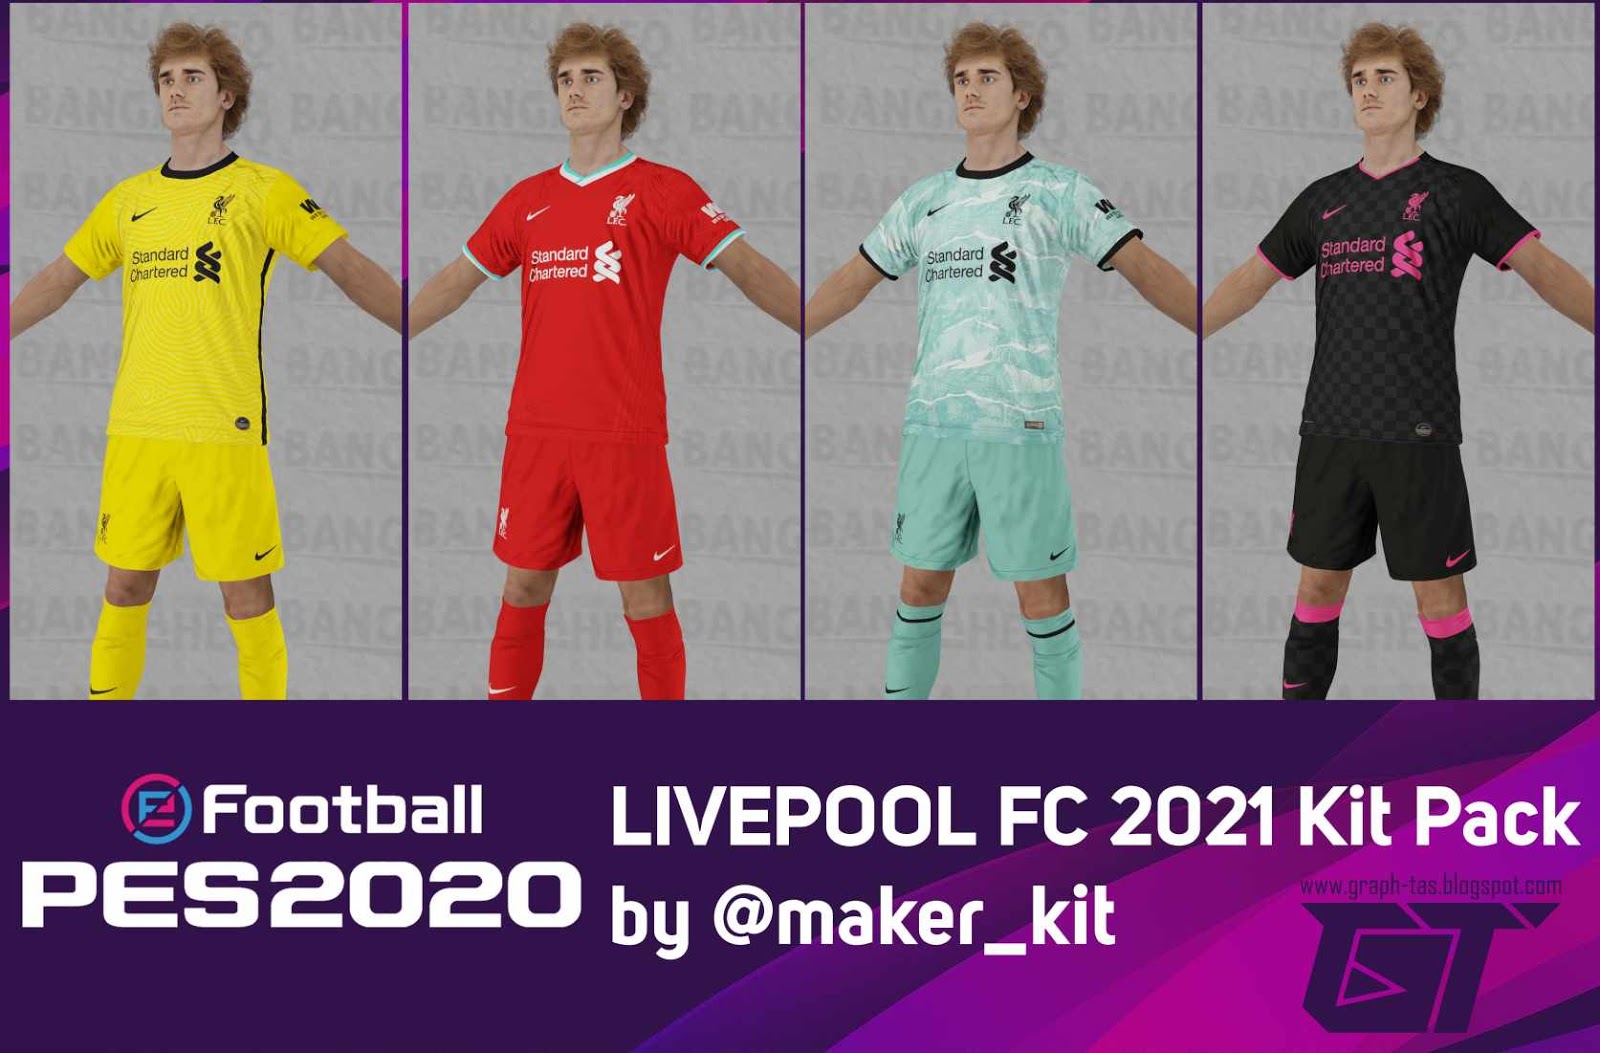 PES 2020 Liverpool FC 2021 Kit Pack by @maker_kit